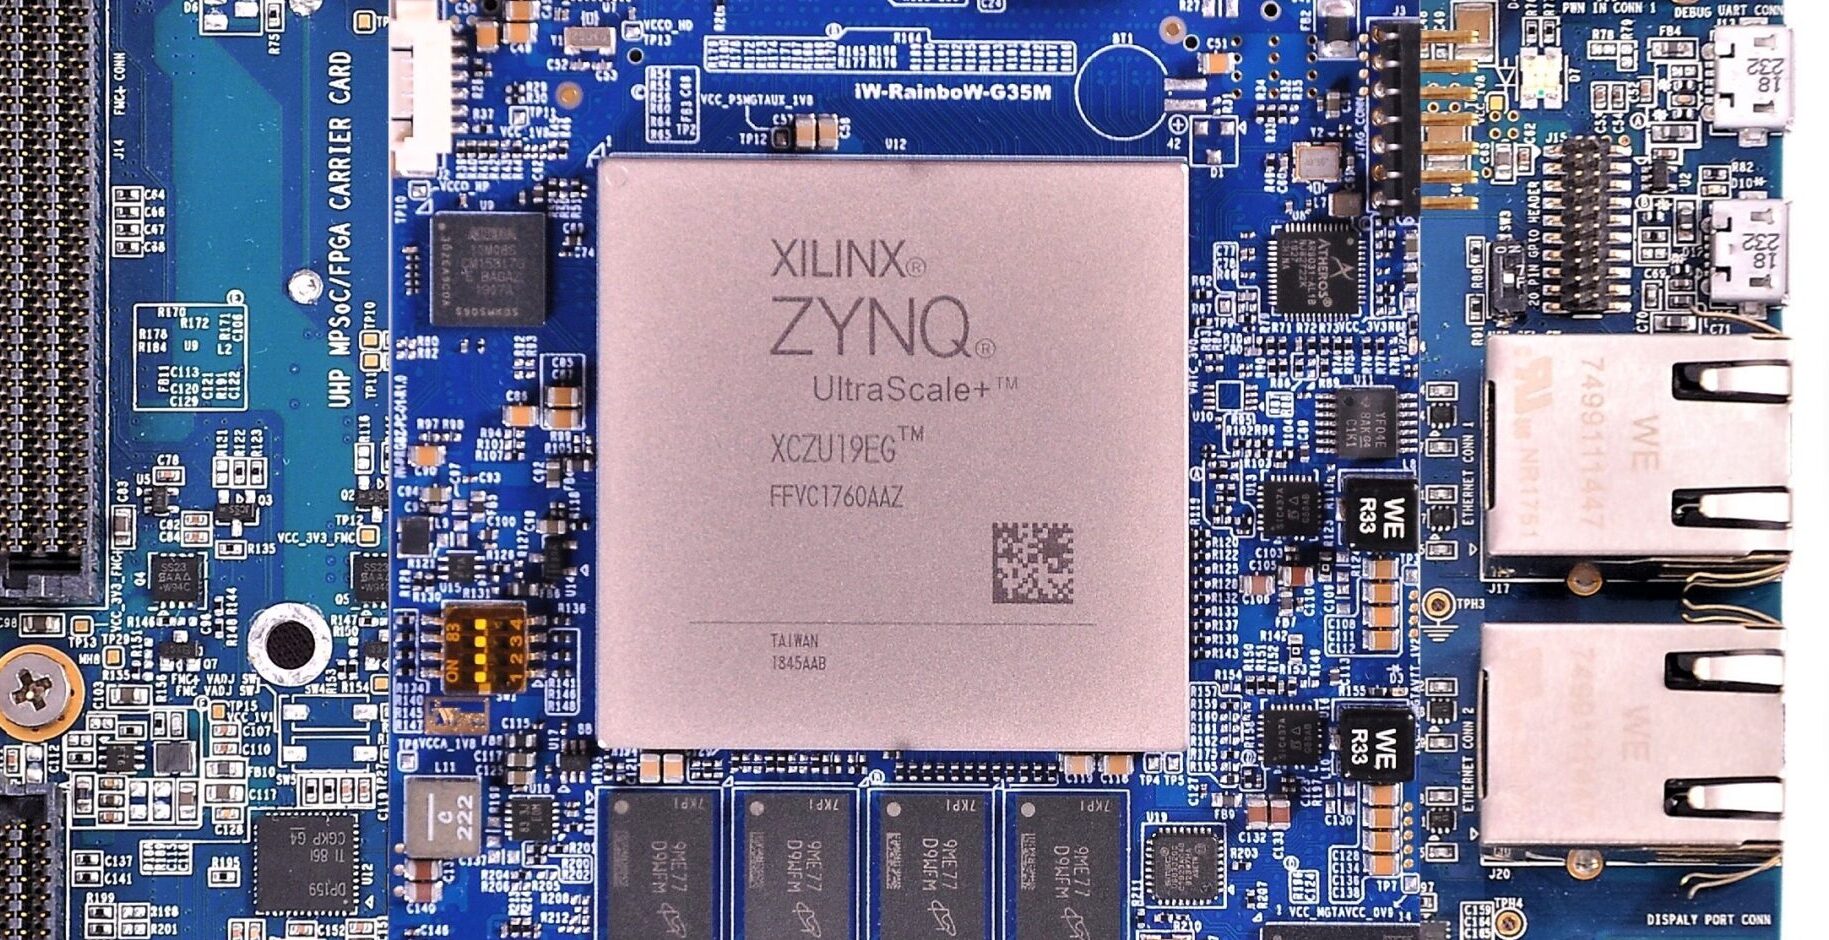 Enabling 4K Ultra HD Capabilities Through iWave’s Zynq Ultrascale+ MPSoC Platform